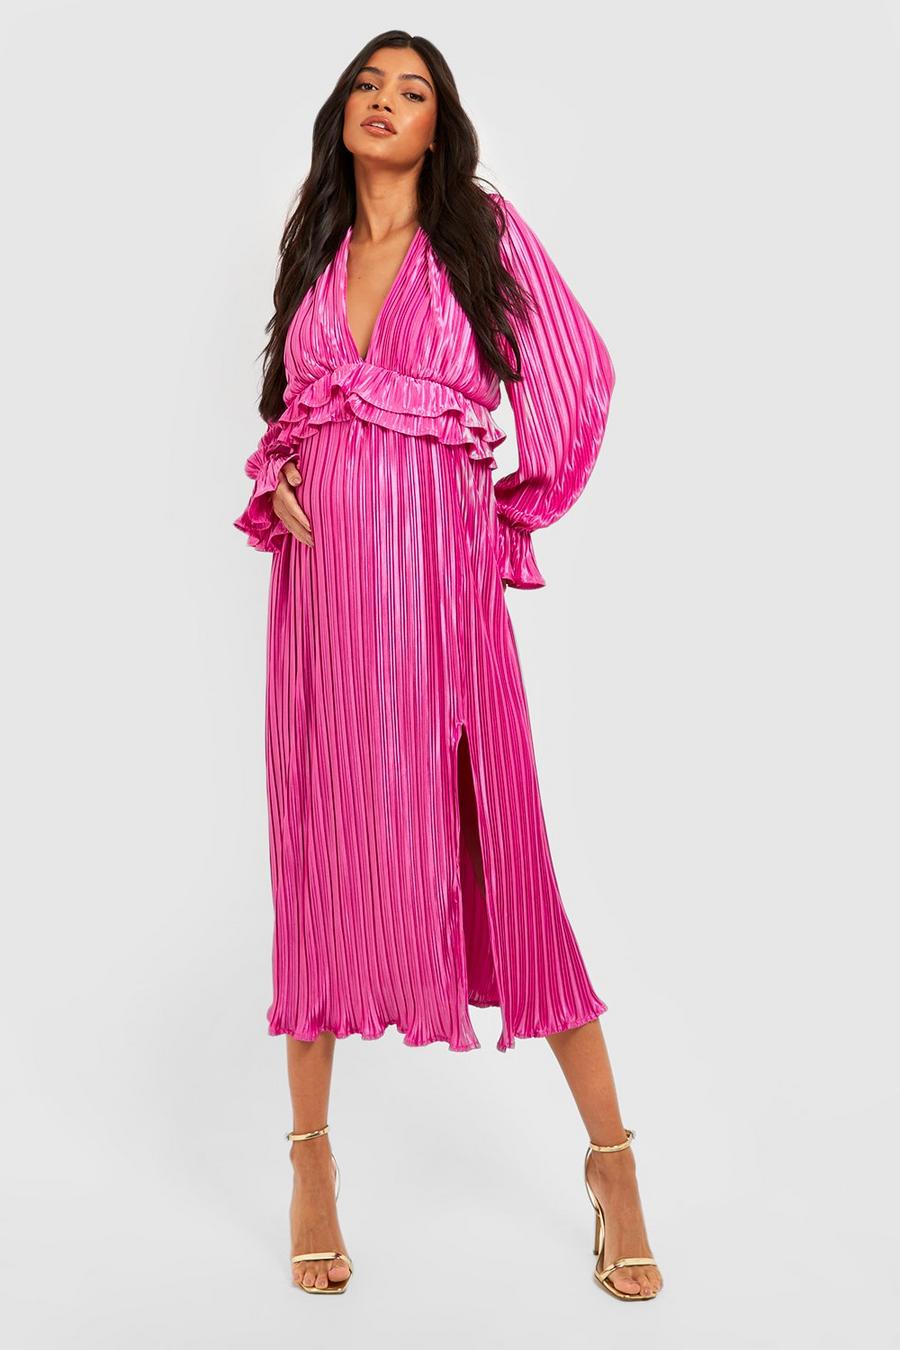 Umstandsmode Satin Plissee-Kleid mit Rüschen, Hot pink image number 1